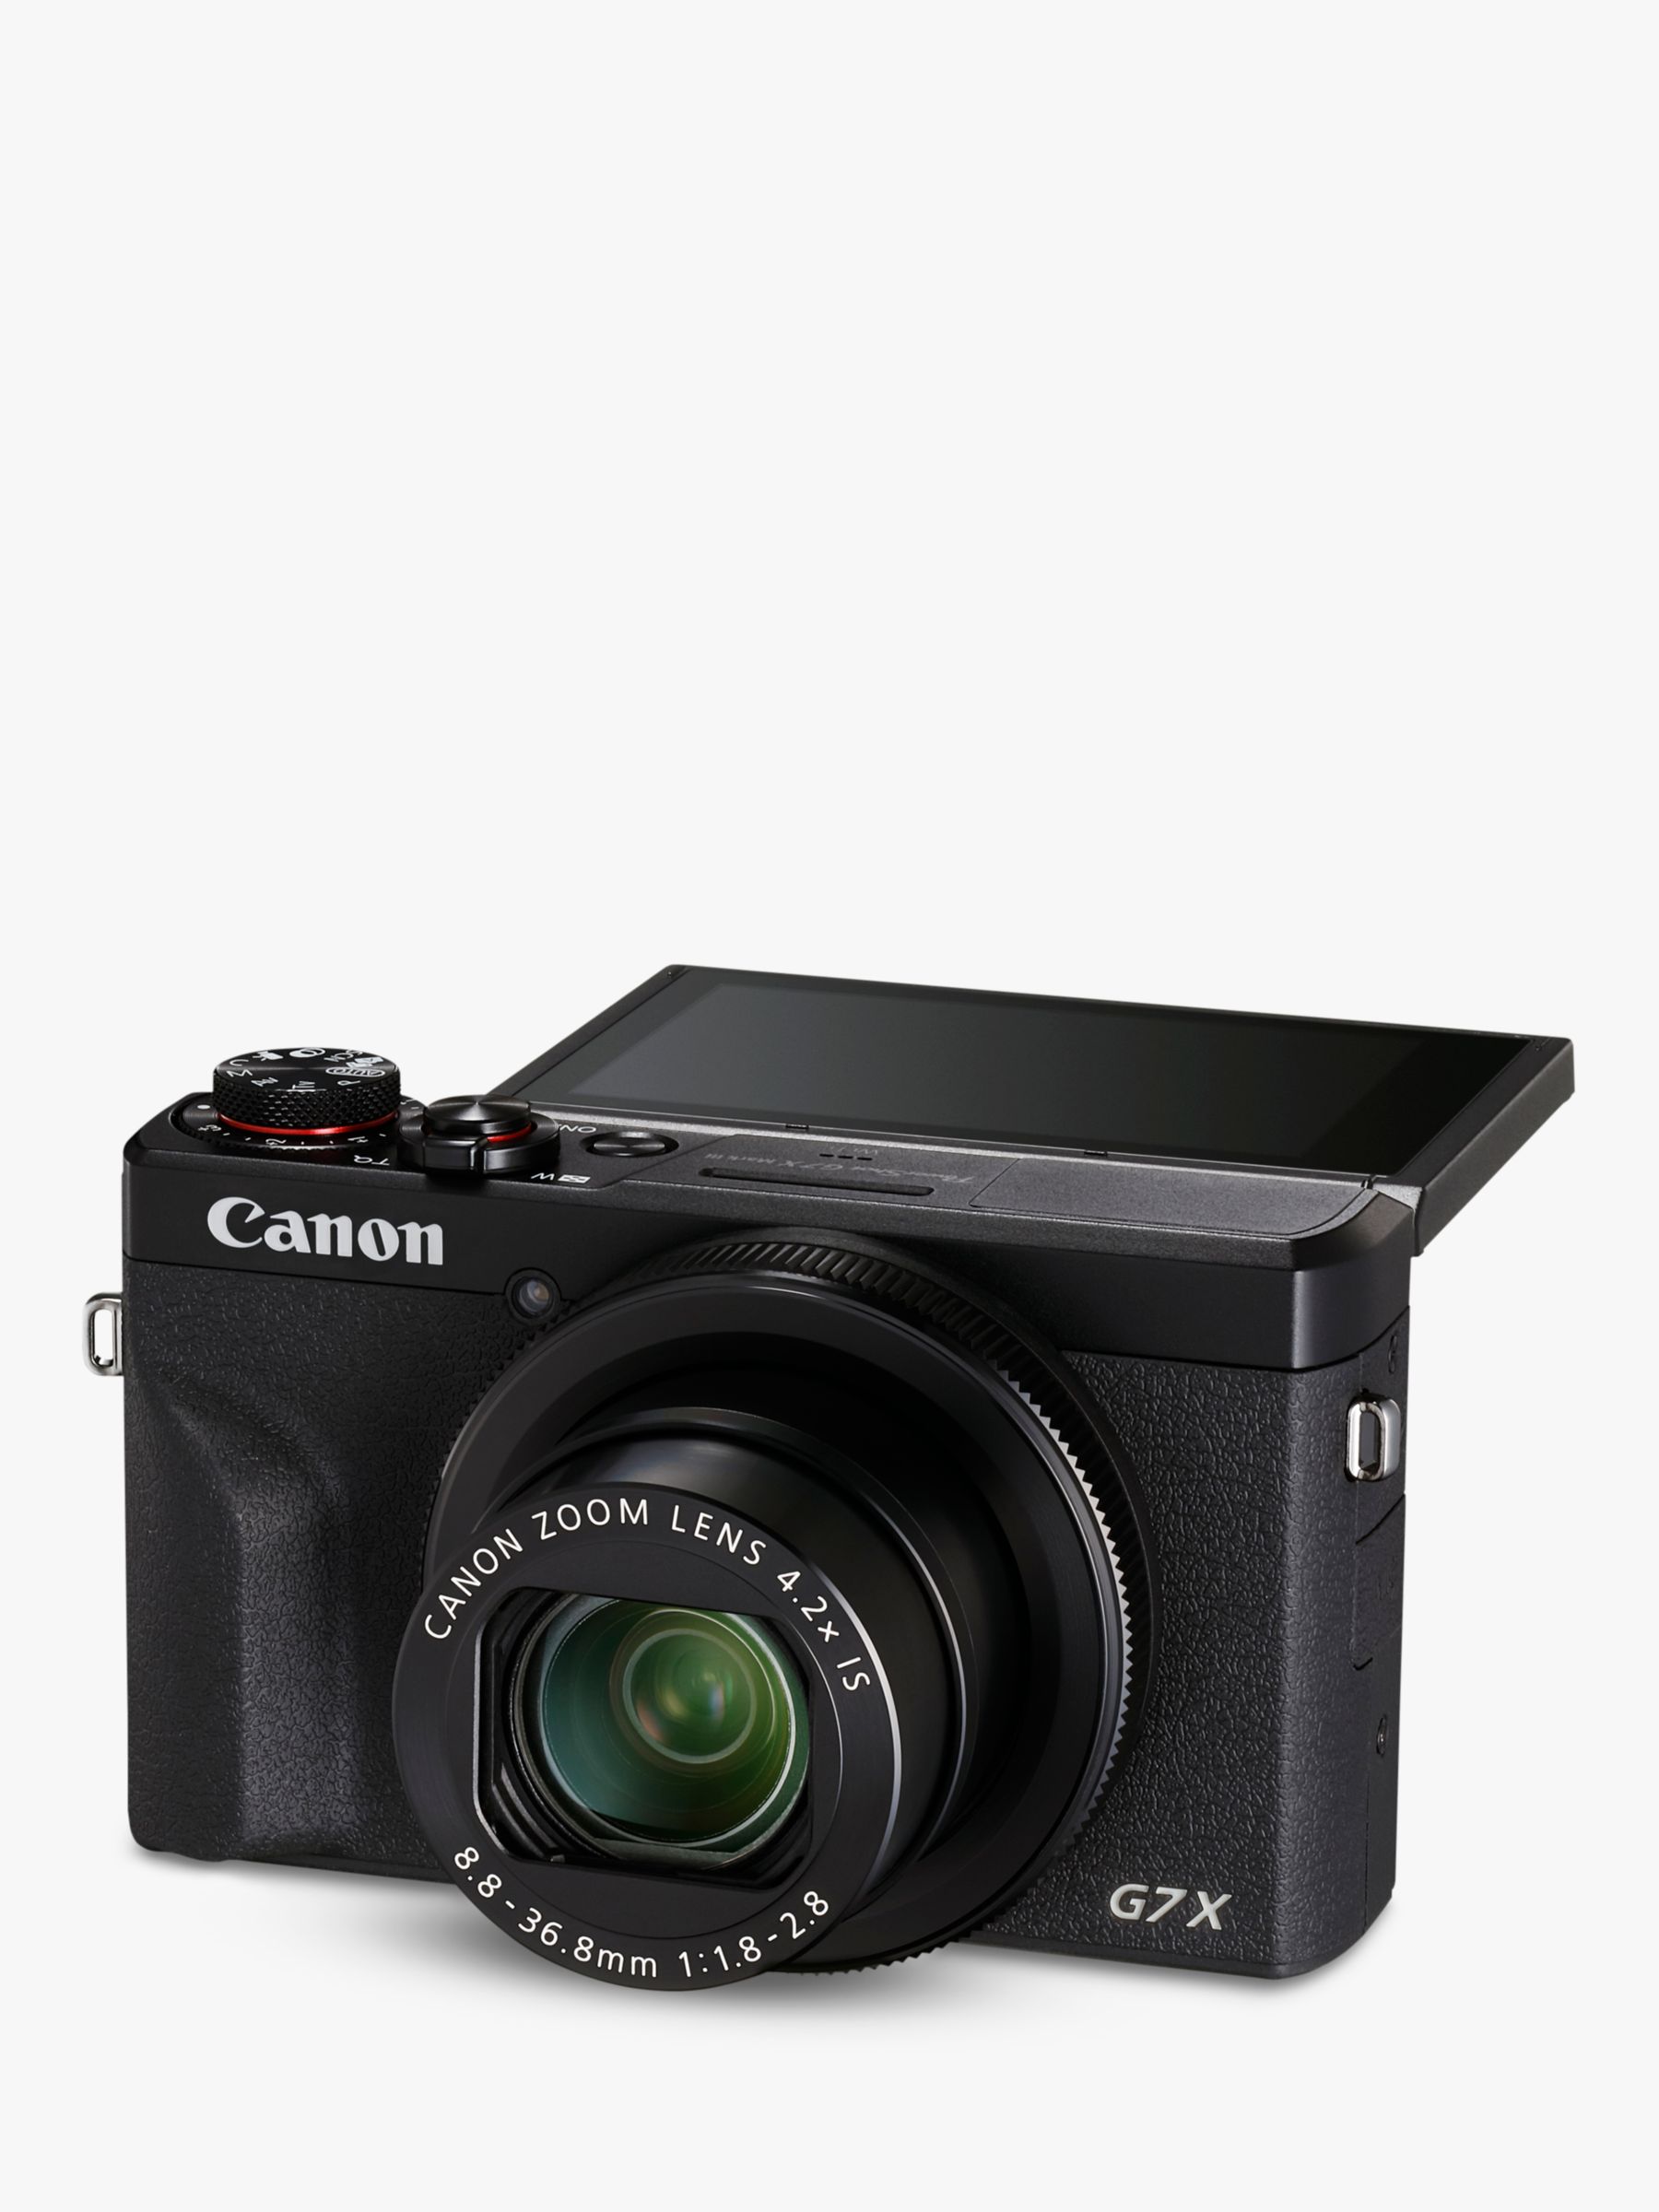 Canon PowerShot G7 X Mark III 20.1 Megapixel Compact Camera - Silver - 1  Sensor - Autofocus - 3 Touchscreen LCD - 4.2x Optical Zoom - 4x Digital